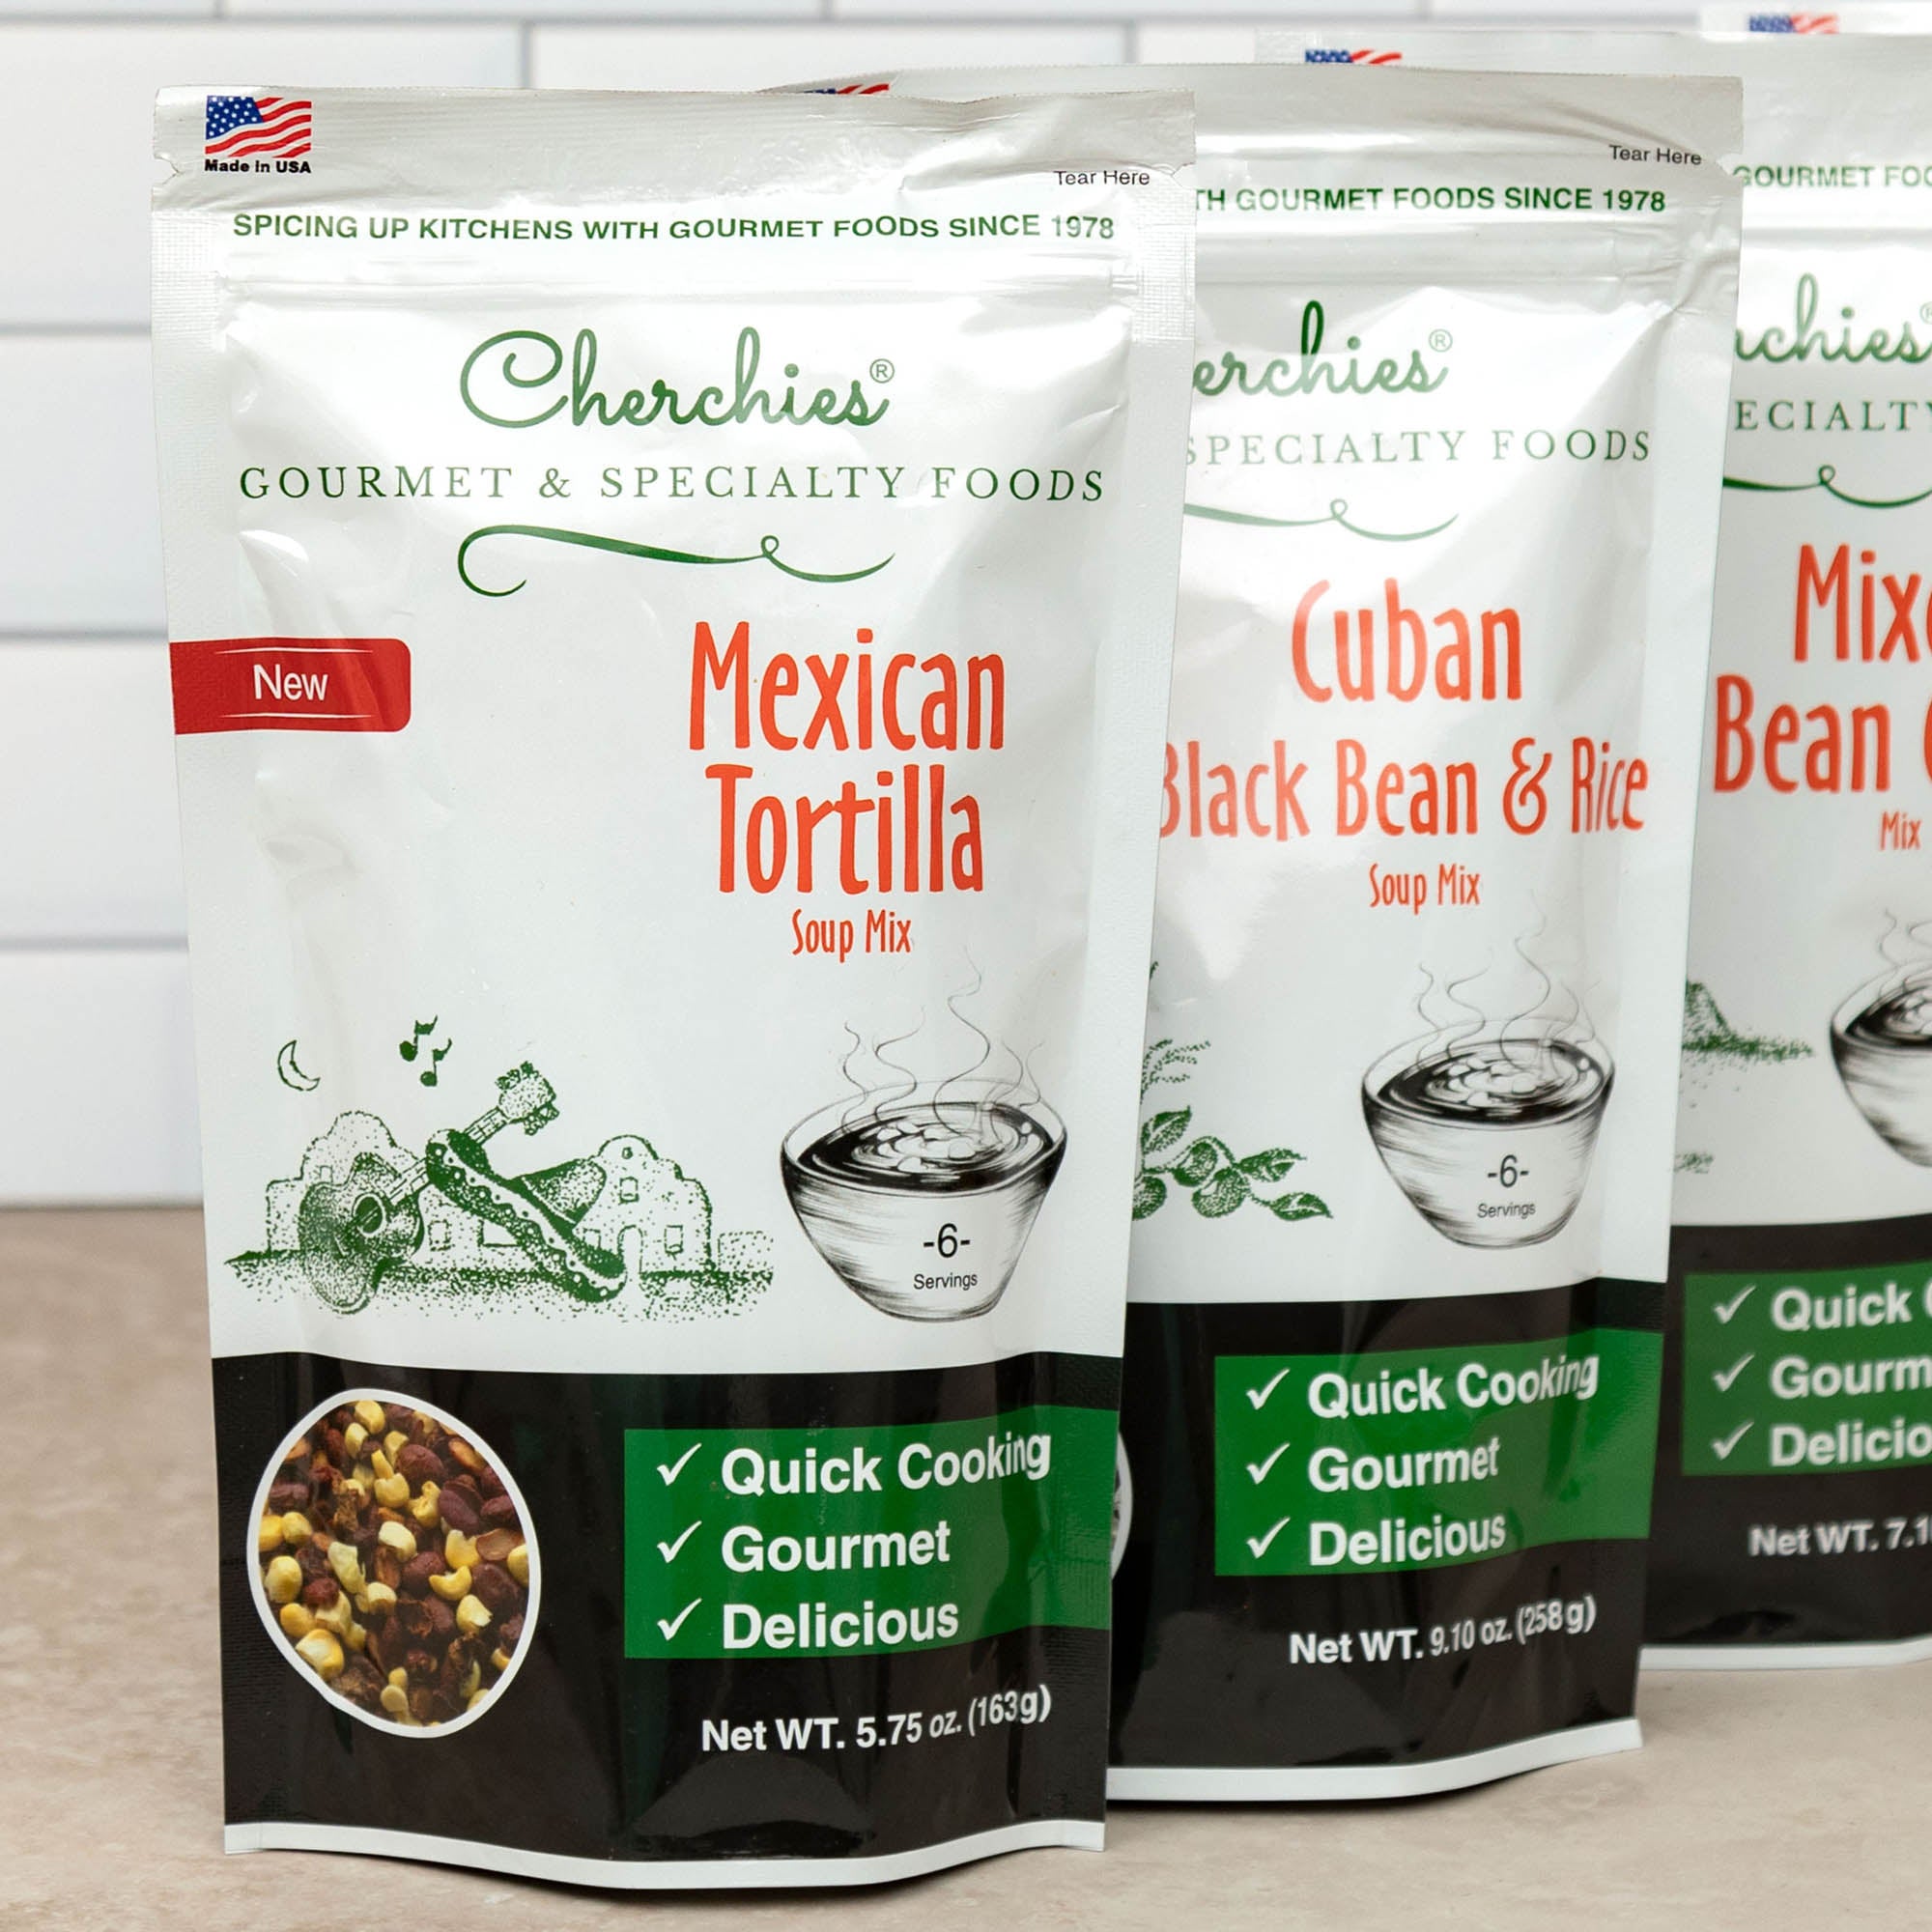 Cherchies® Quick Cooking Spicy Soup Mix - Cuban Black Bean & Rice